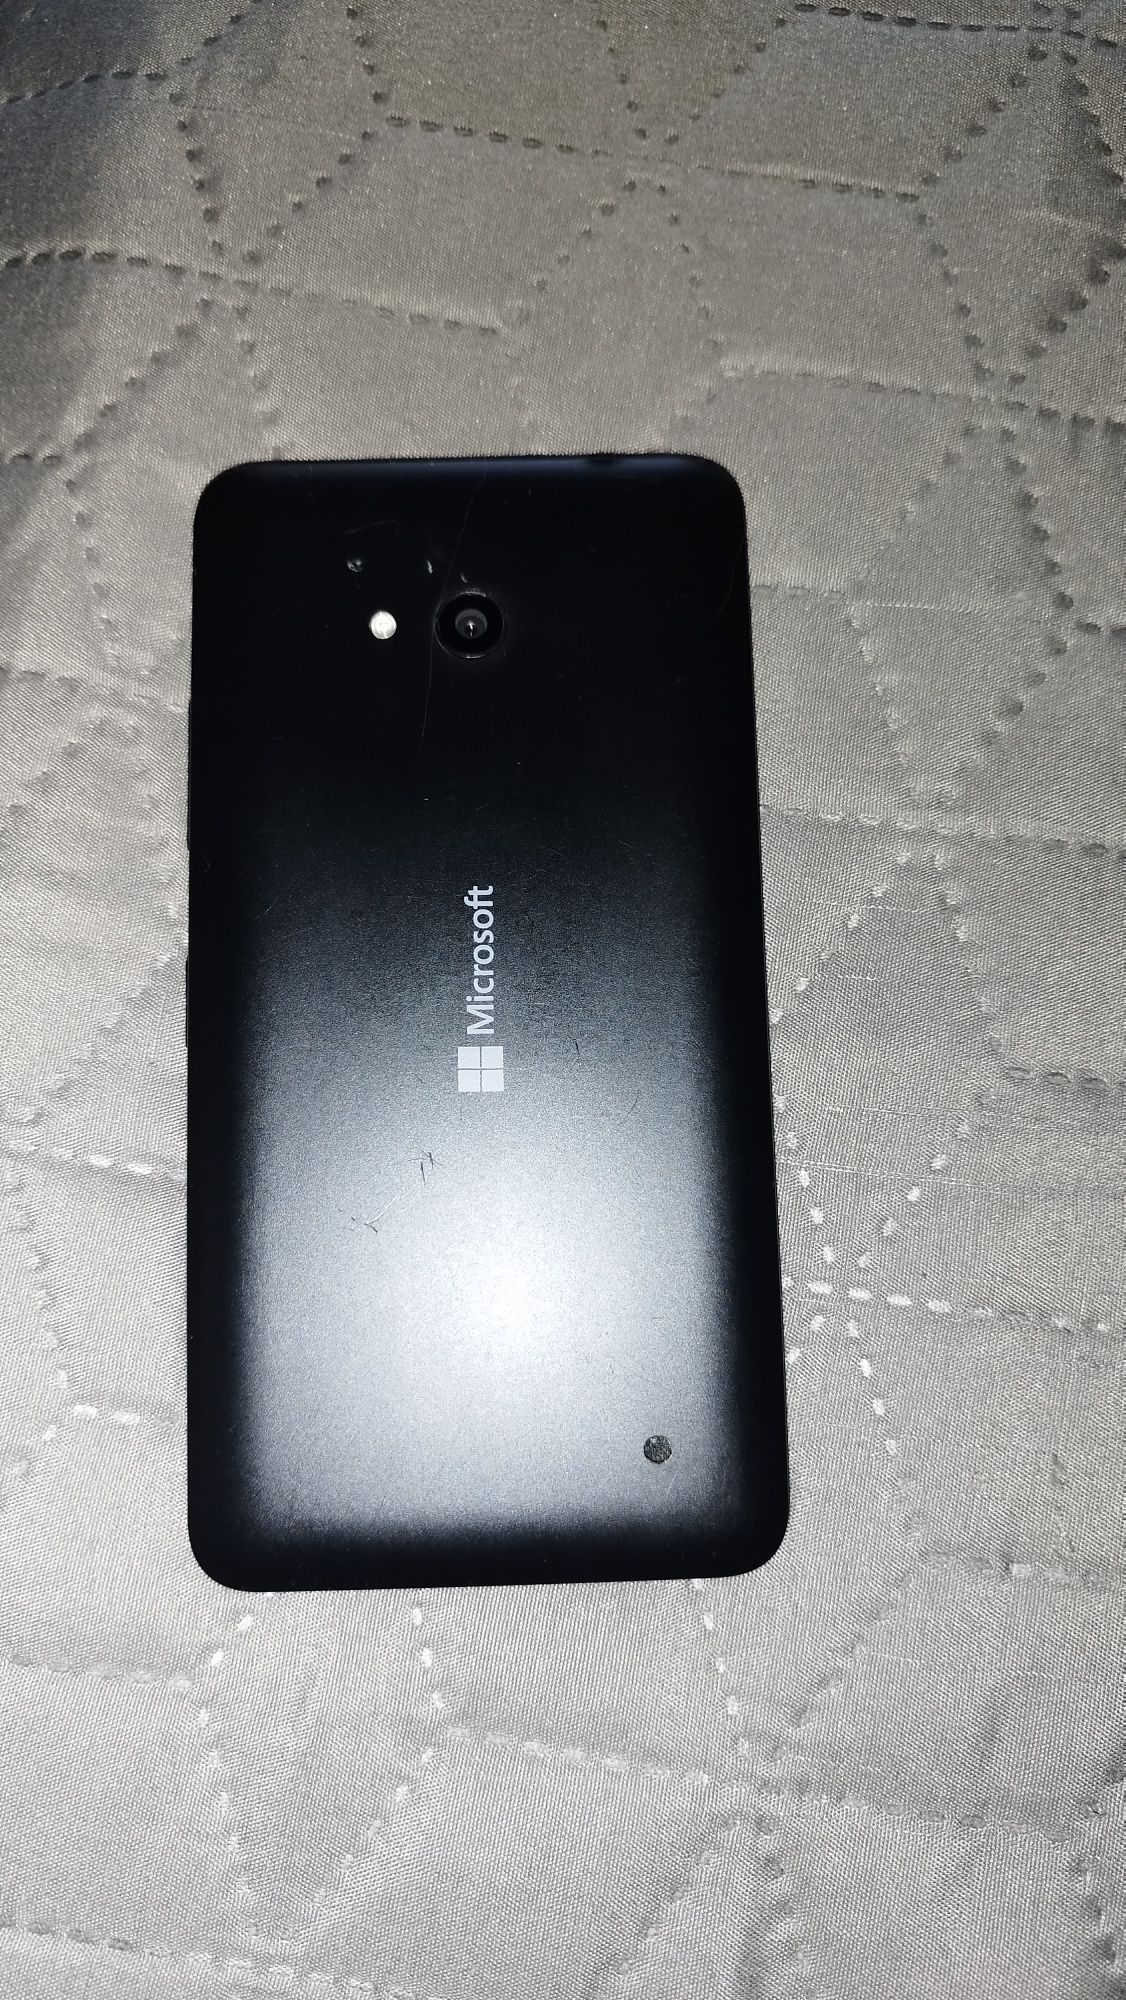 Microsoft Lumia 640 RM-1077 dual sim